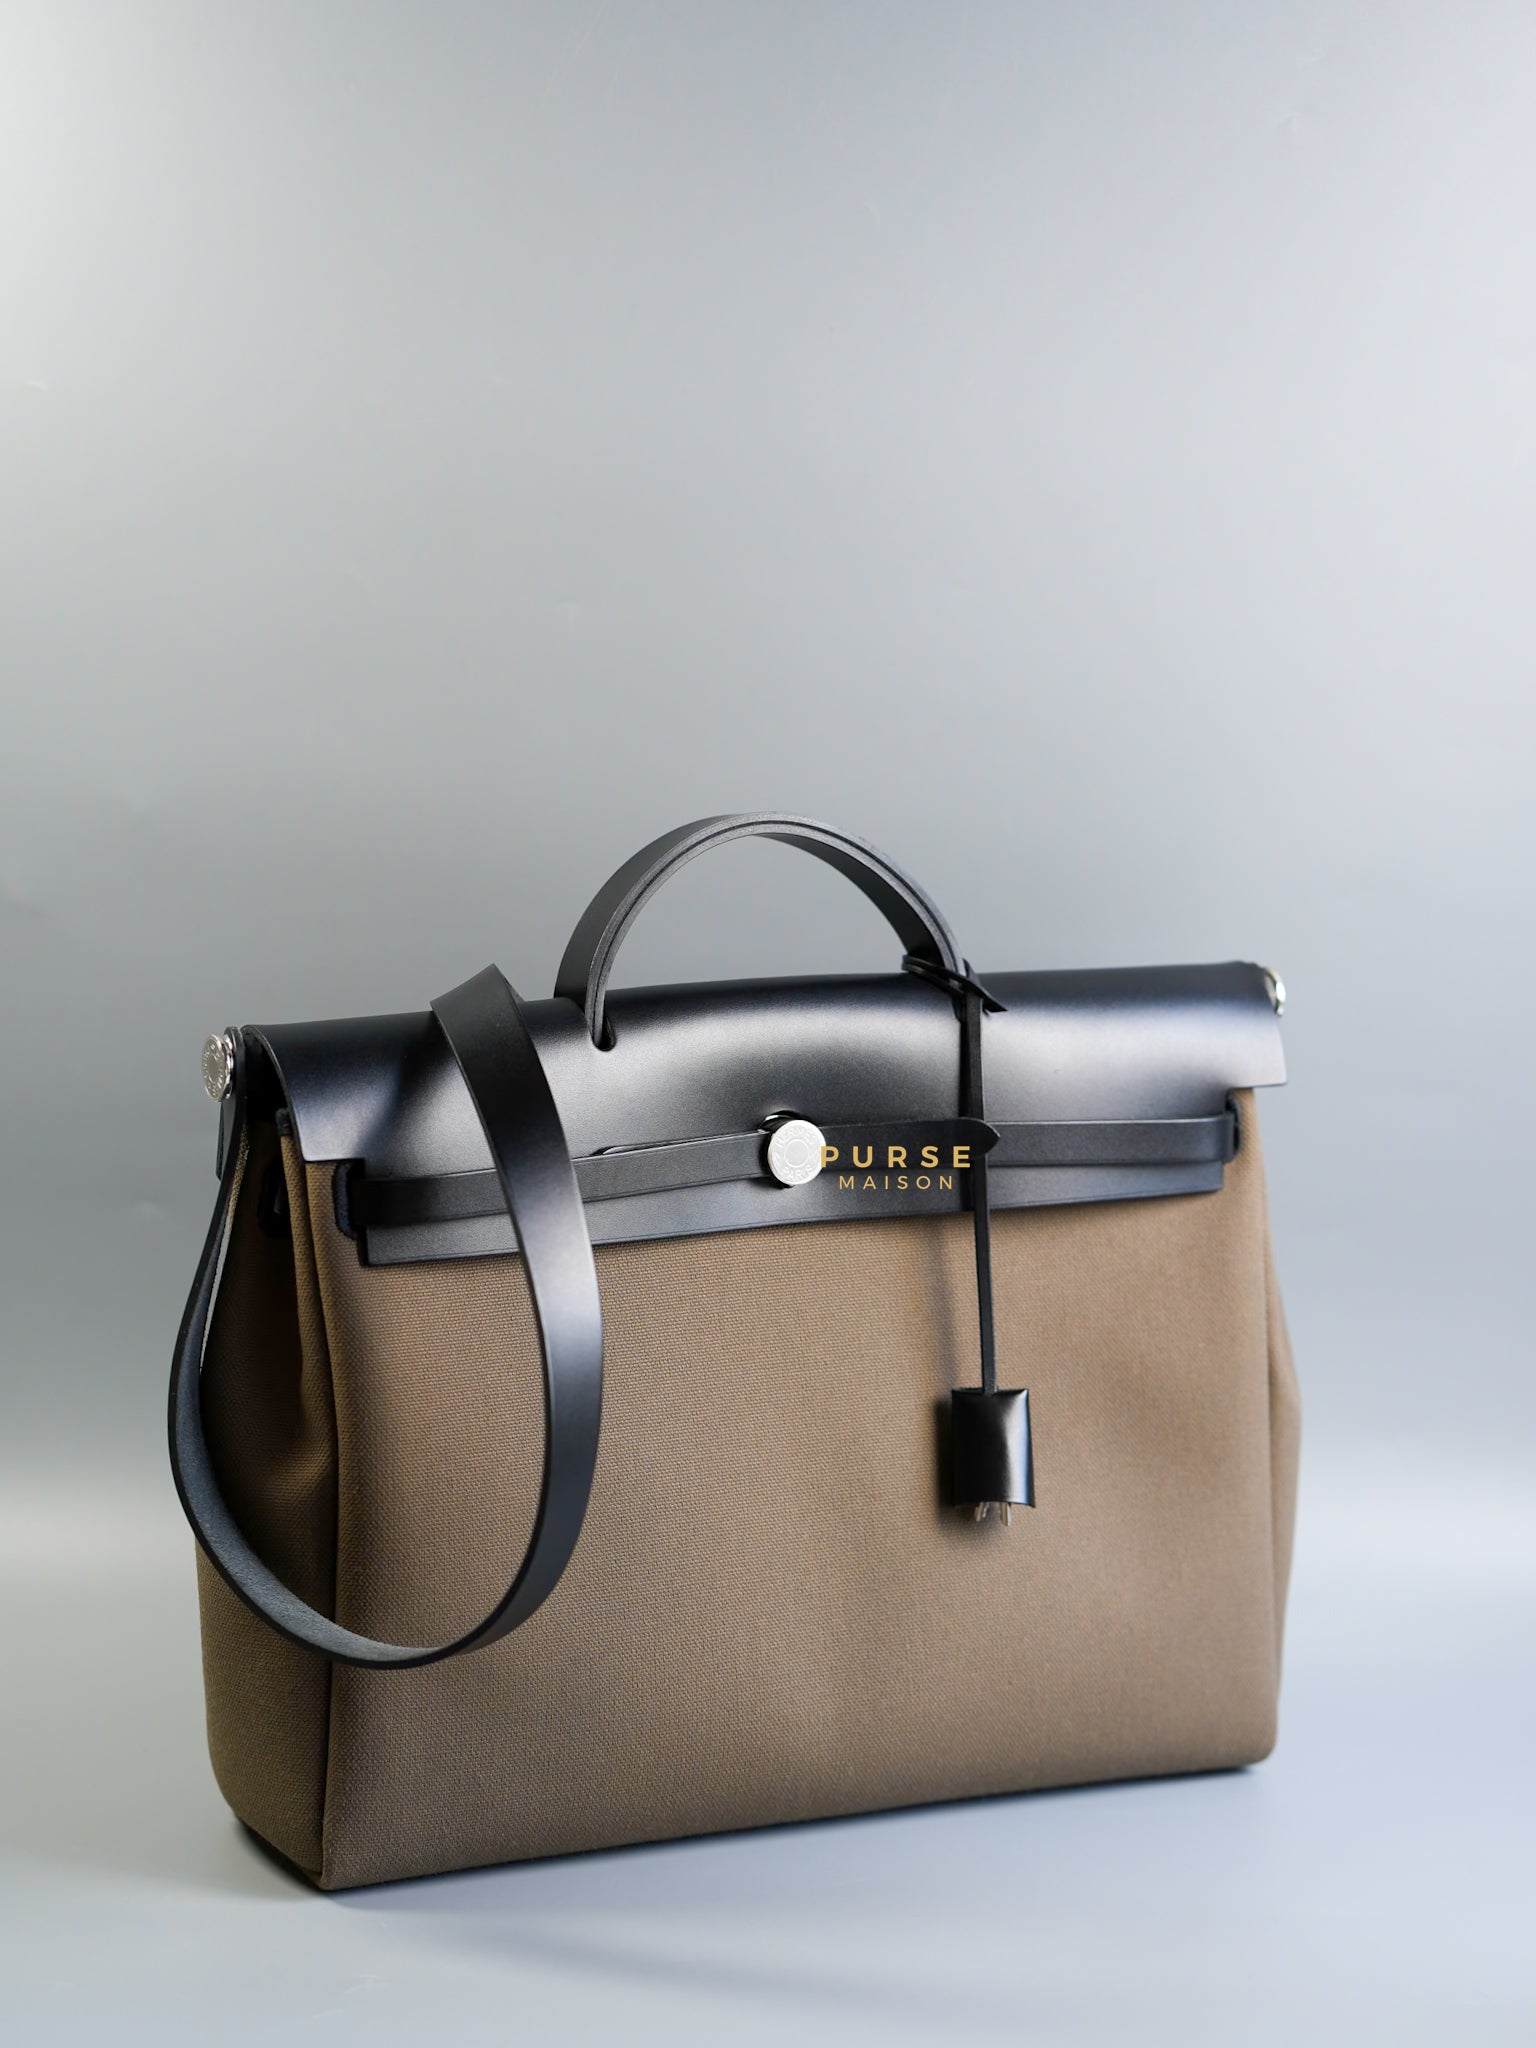 Herbag 39 Messenger Bag in Toile Militaire/Noir Stamp B | Purse Maison Luxury Bags Shop